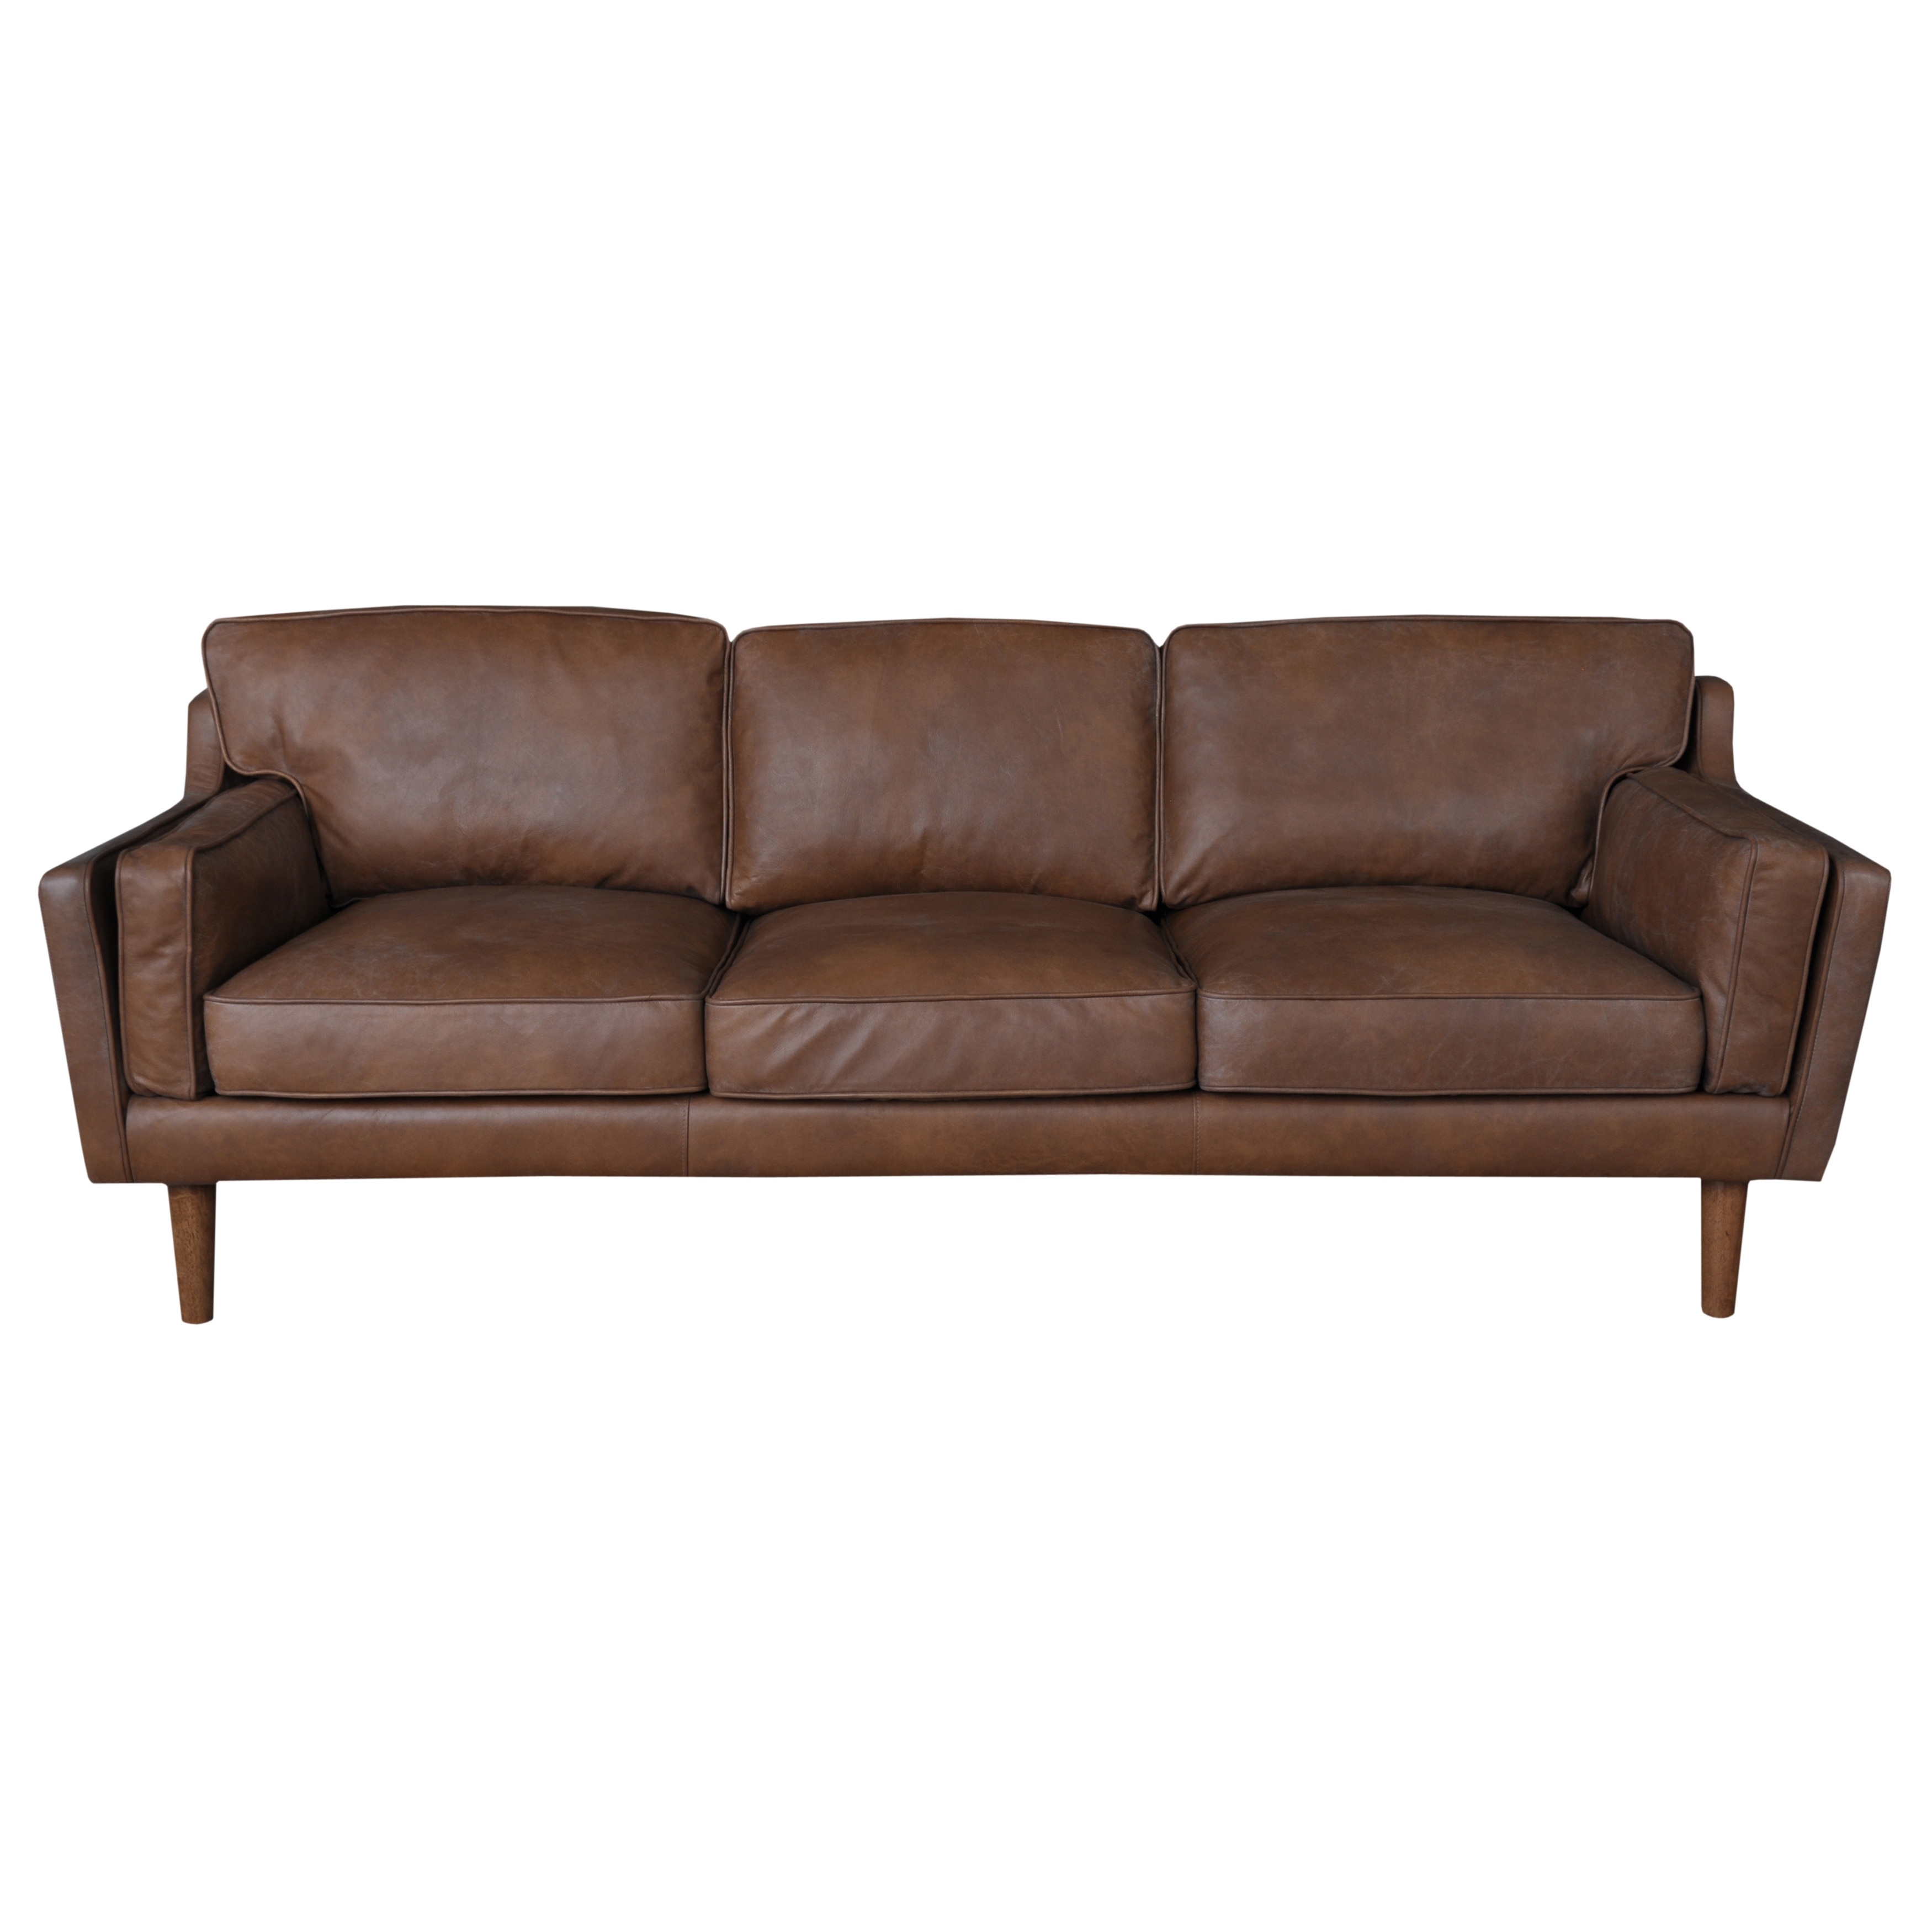 Beatnik Oxford Leather Tan Sofa - Image 0